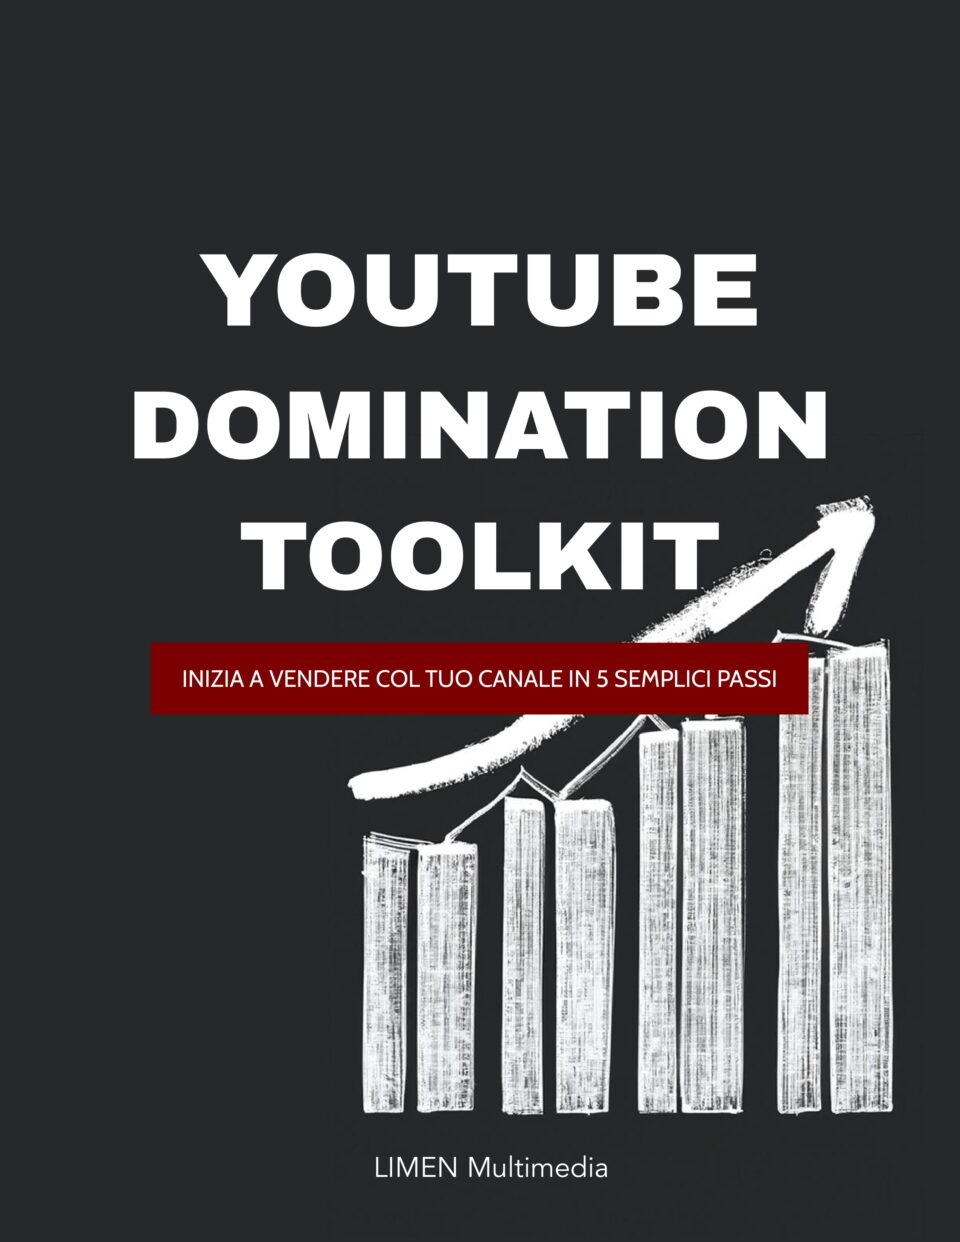 LIMEN Multimedia - YouTube Domination Toolkit